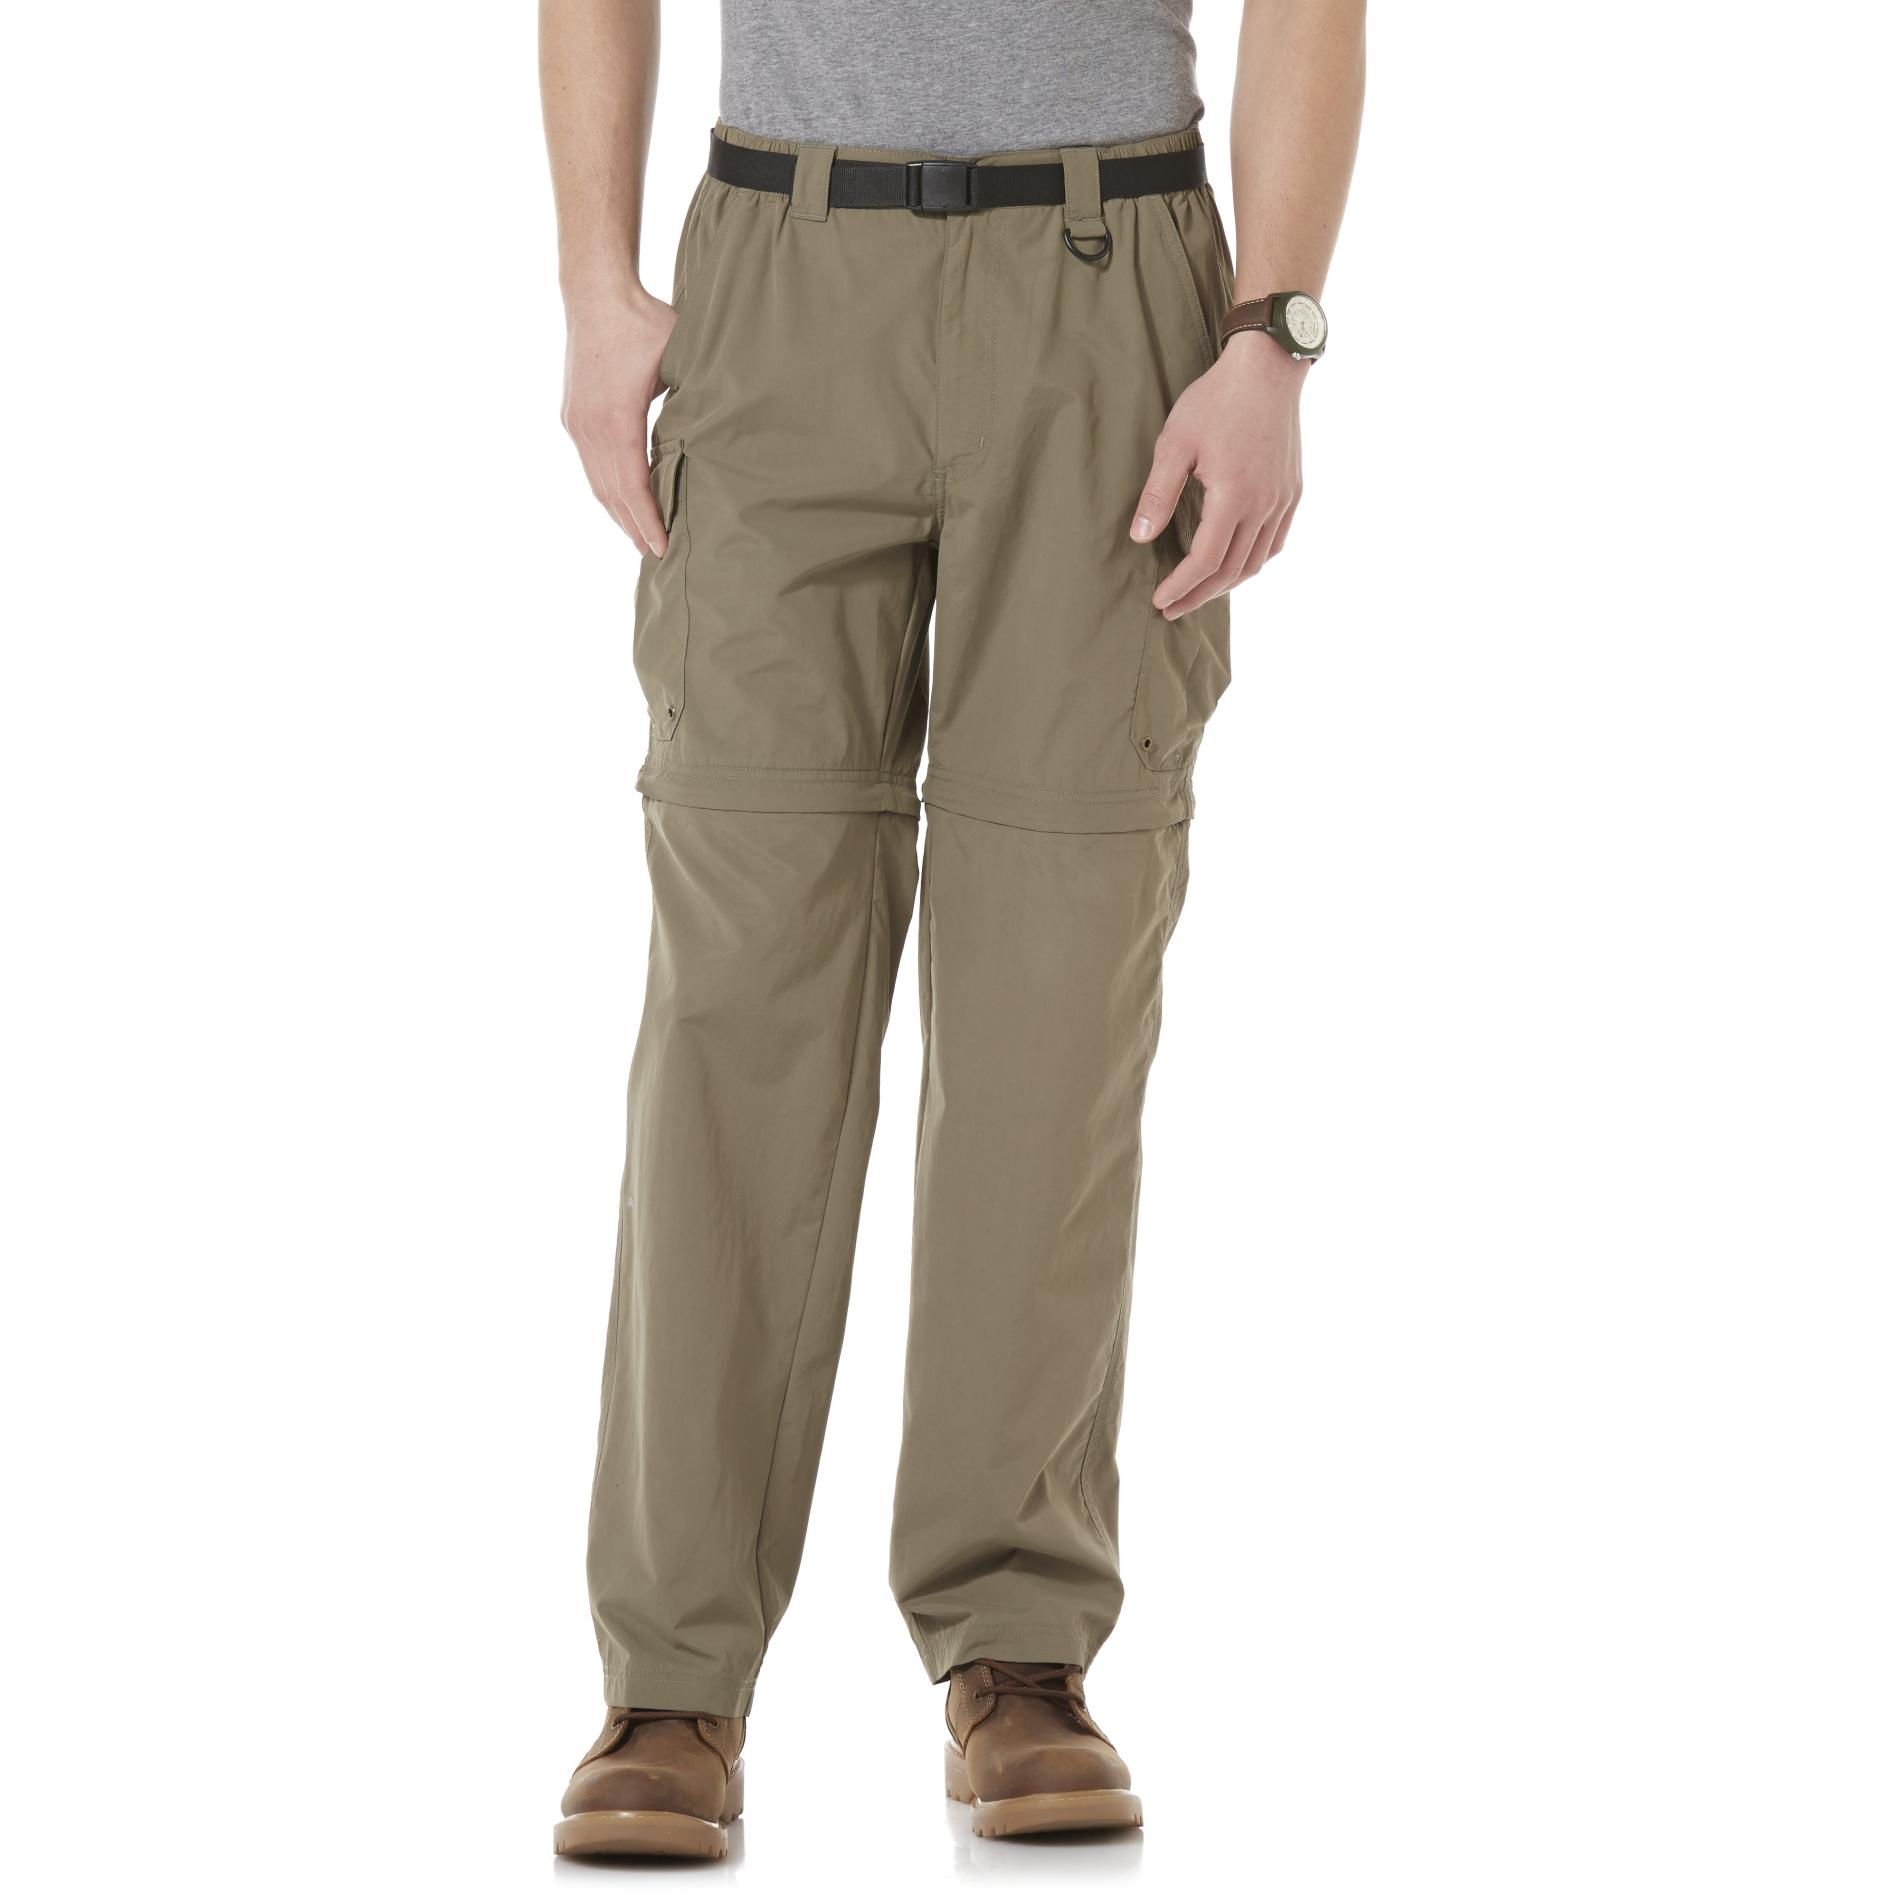 Outdoor Life Men's Belted Convertible Pants